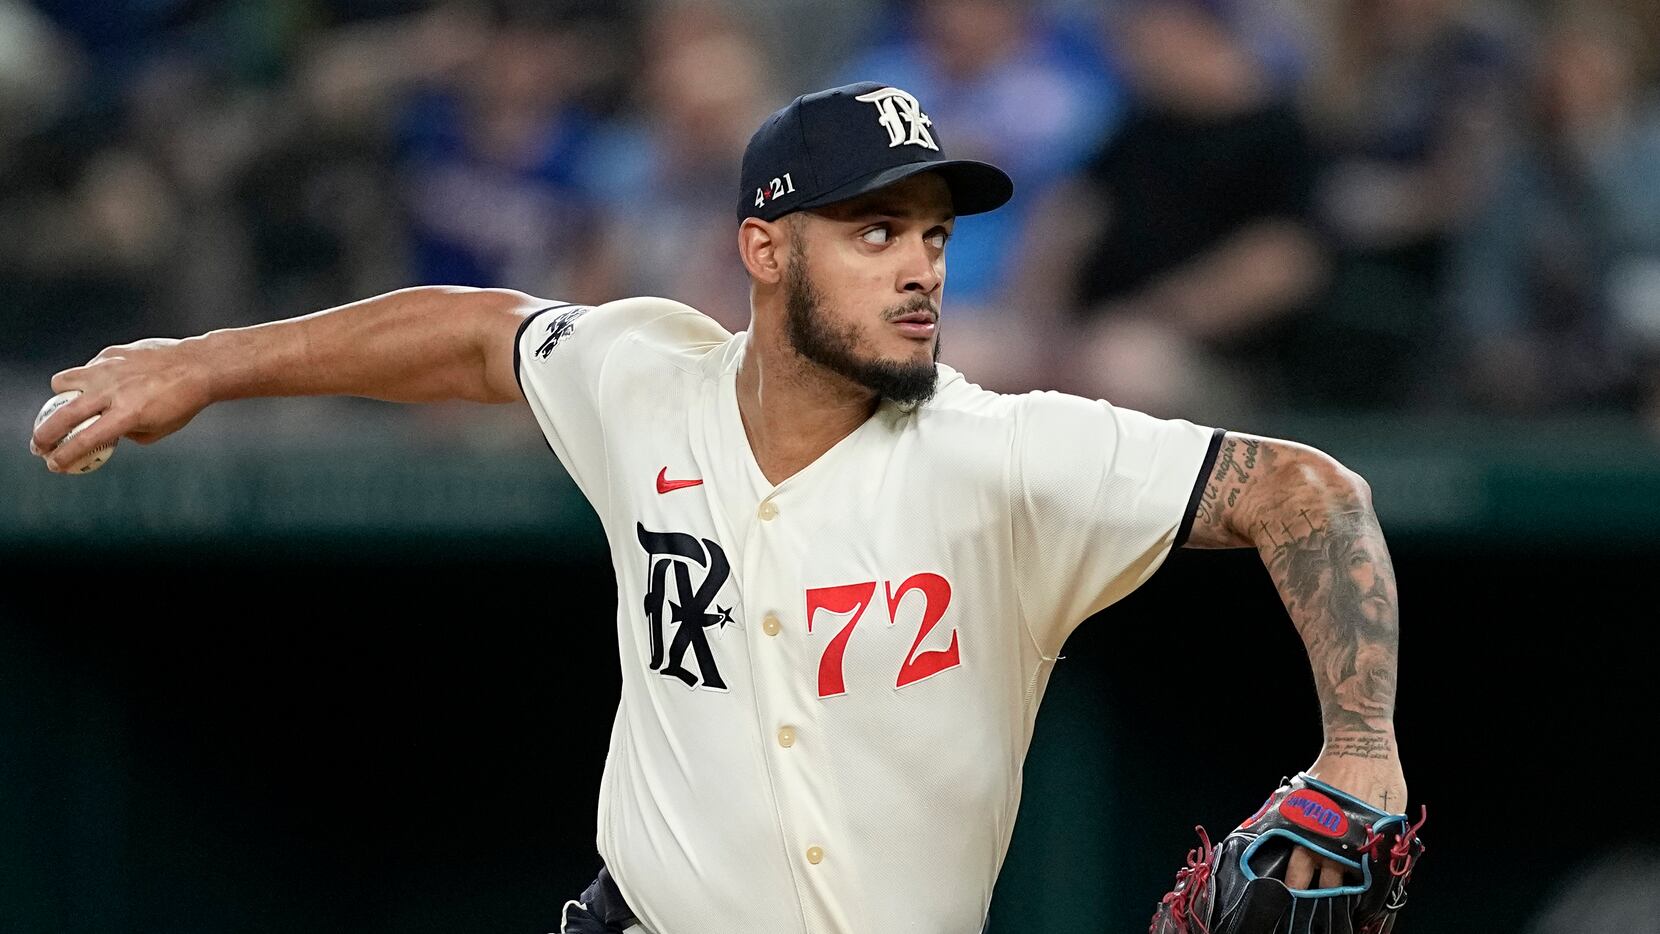 August 21, 2019: Texas Rangers relief pitcher Jonathan Hernandez